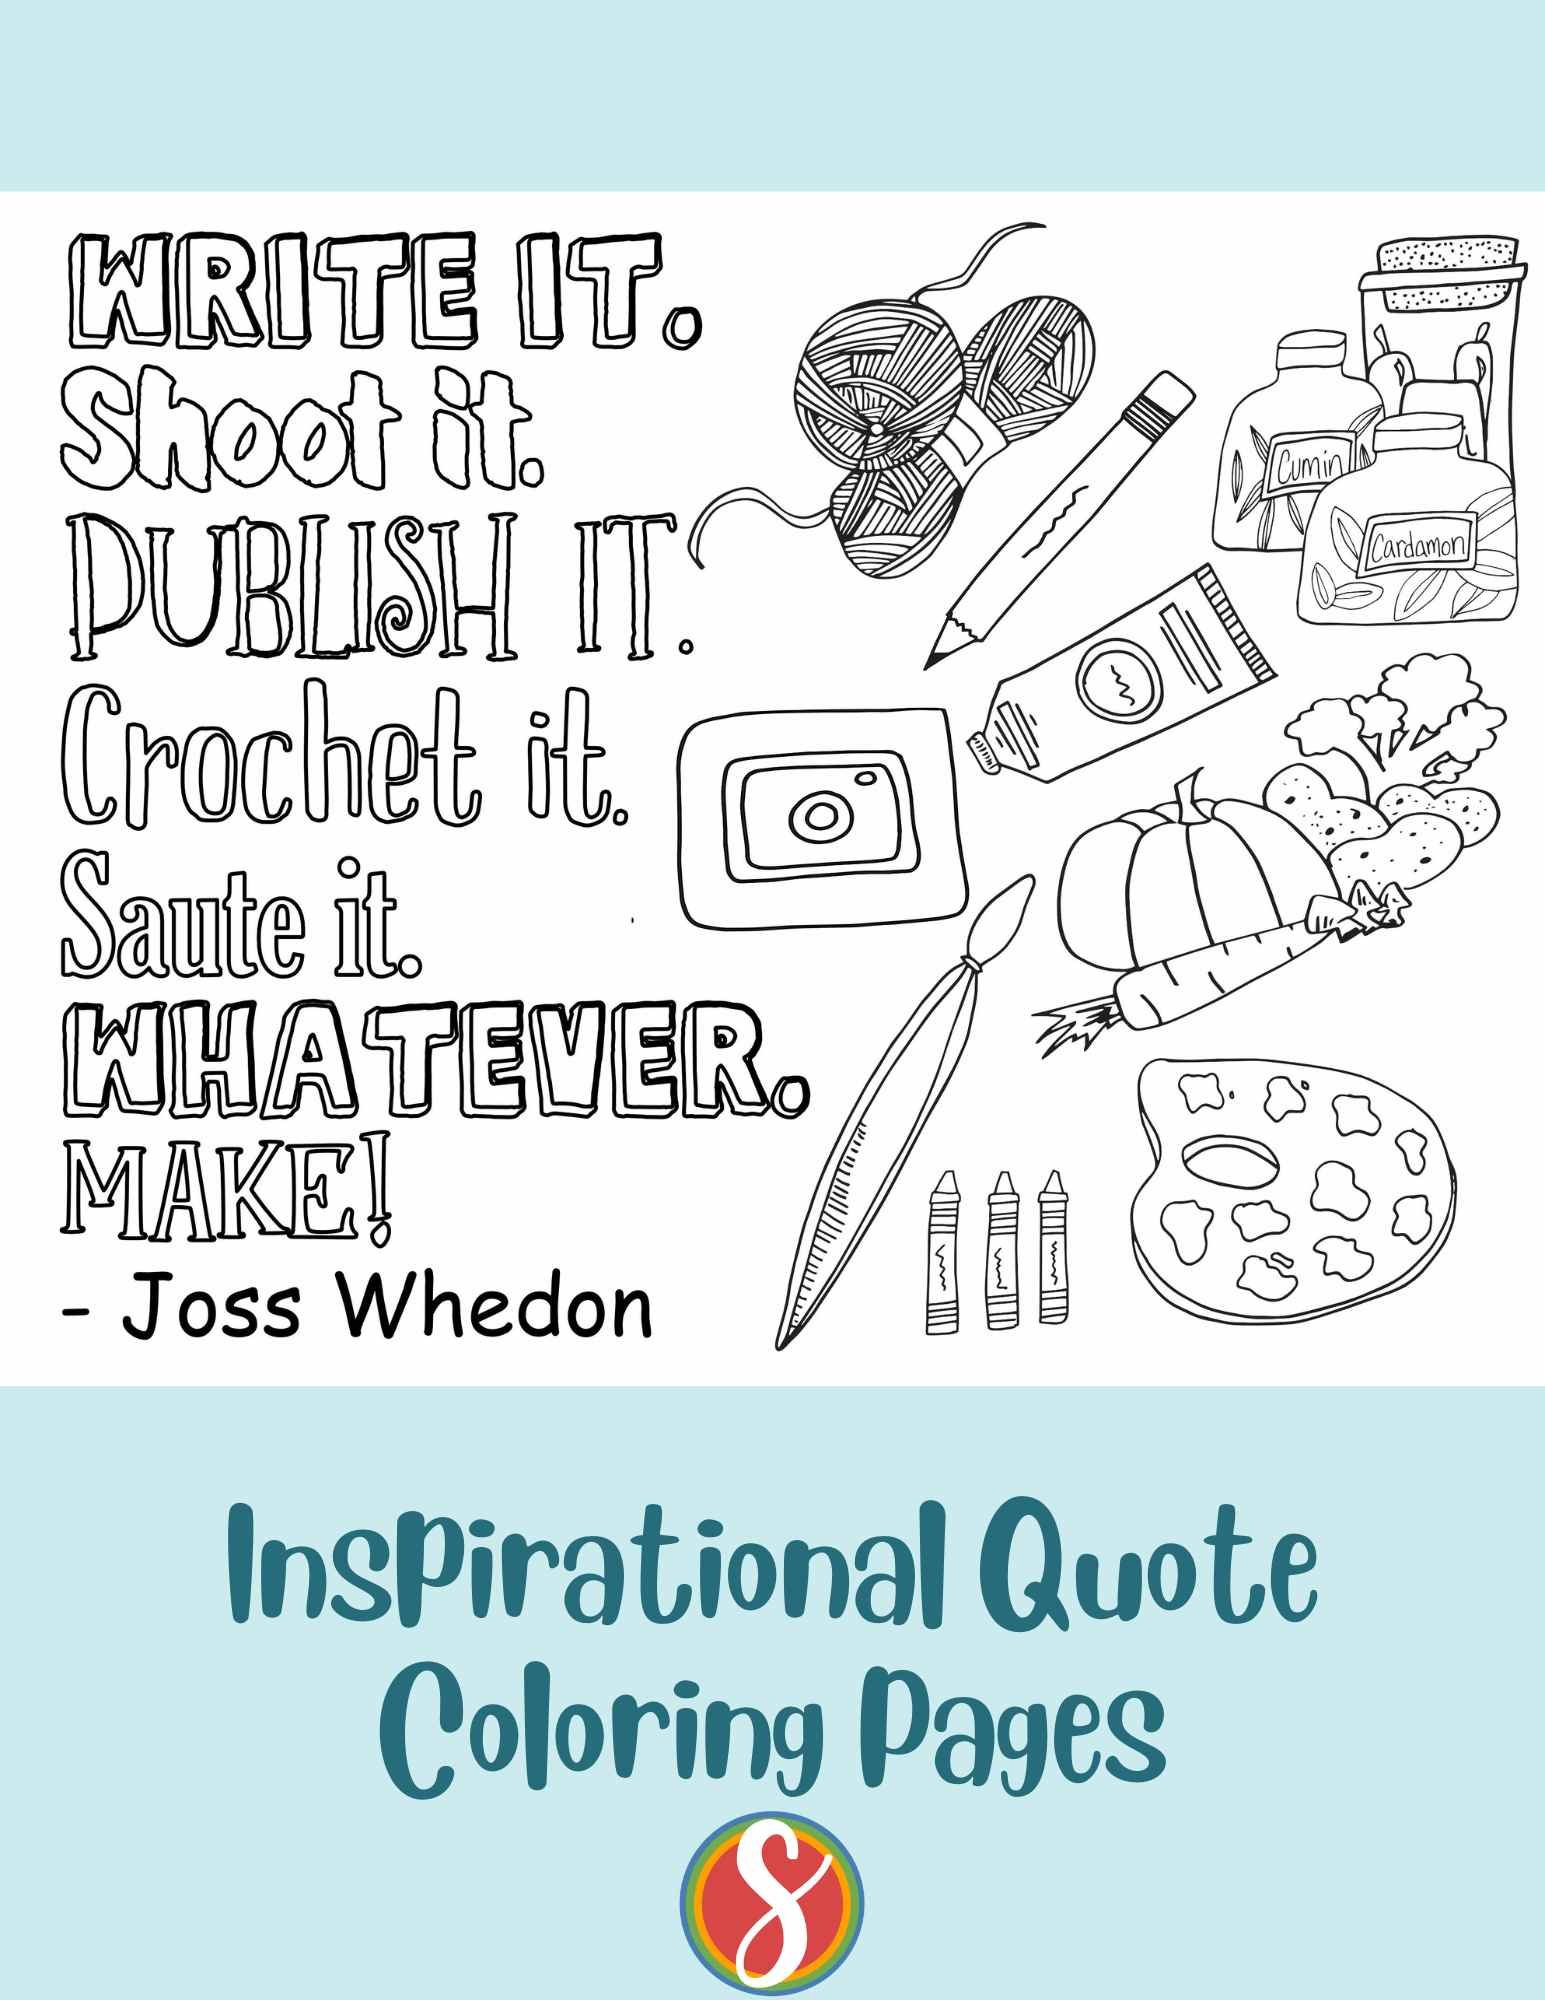 little drawings to color - yarn, pencil, spice jars, paint tube, vegetables, paint pallet, instagram symbol, crayons- colorable words "write it. shoot it. publish it. crochet it. sauté it. whatever. Make!"